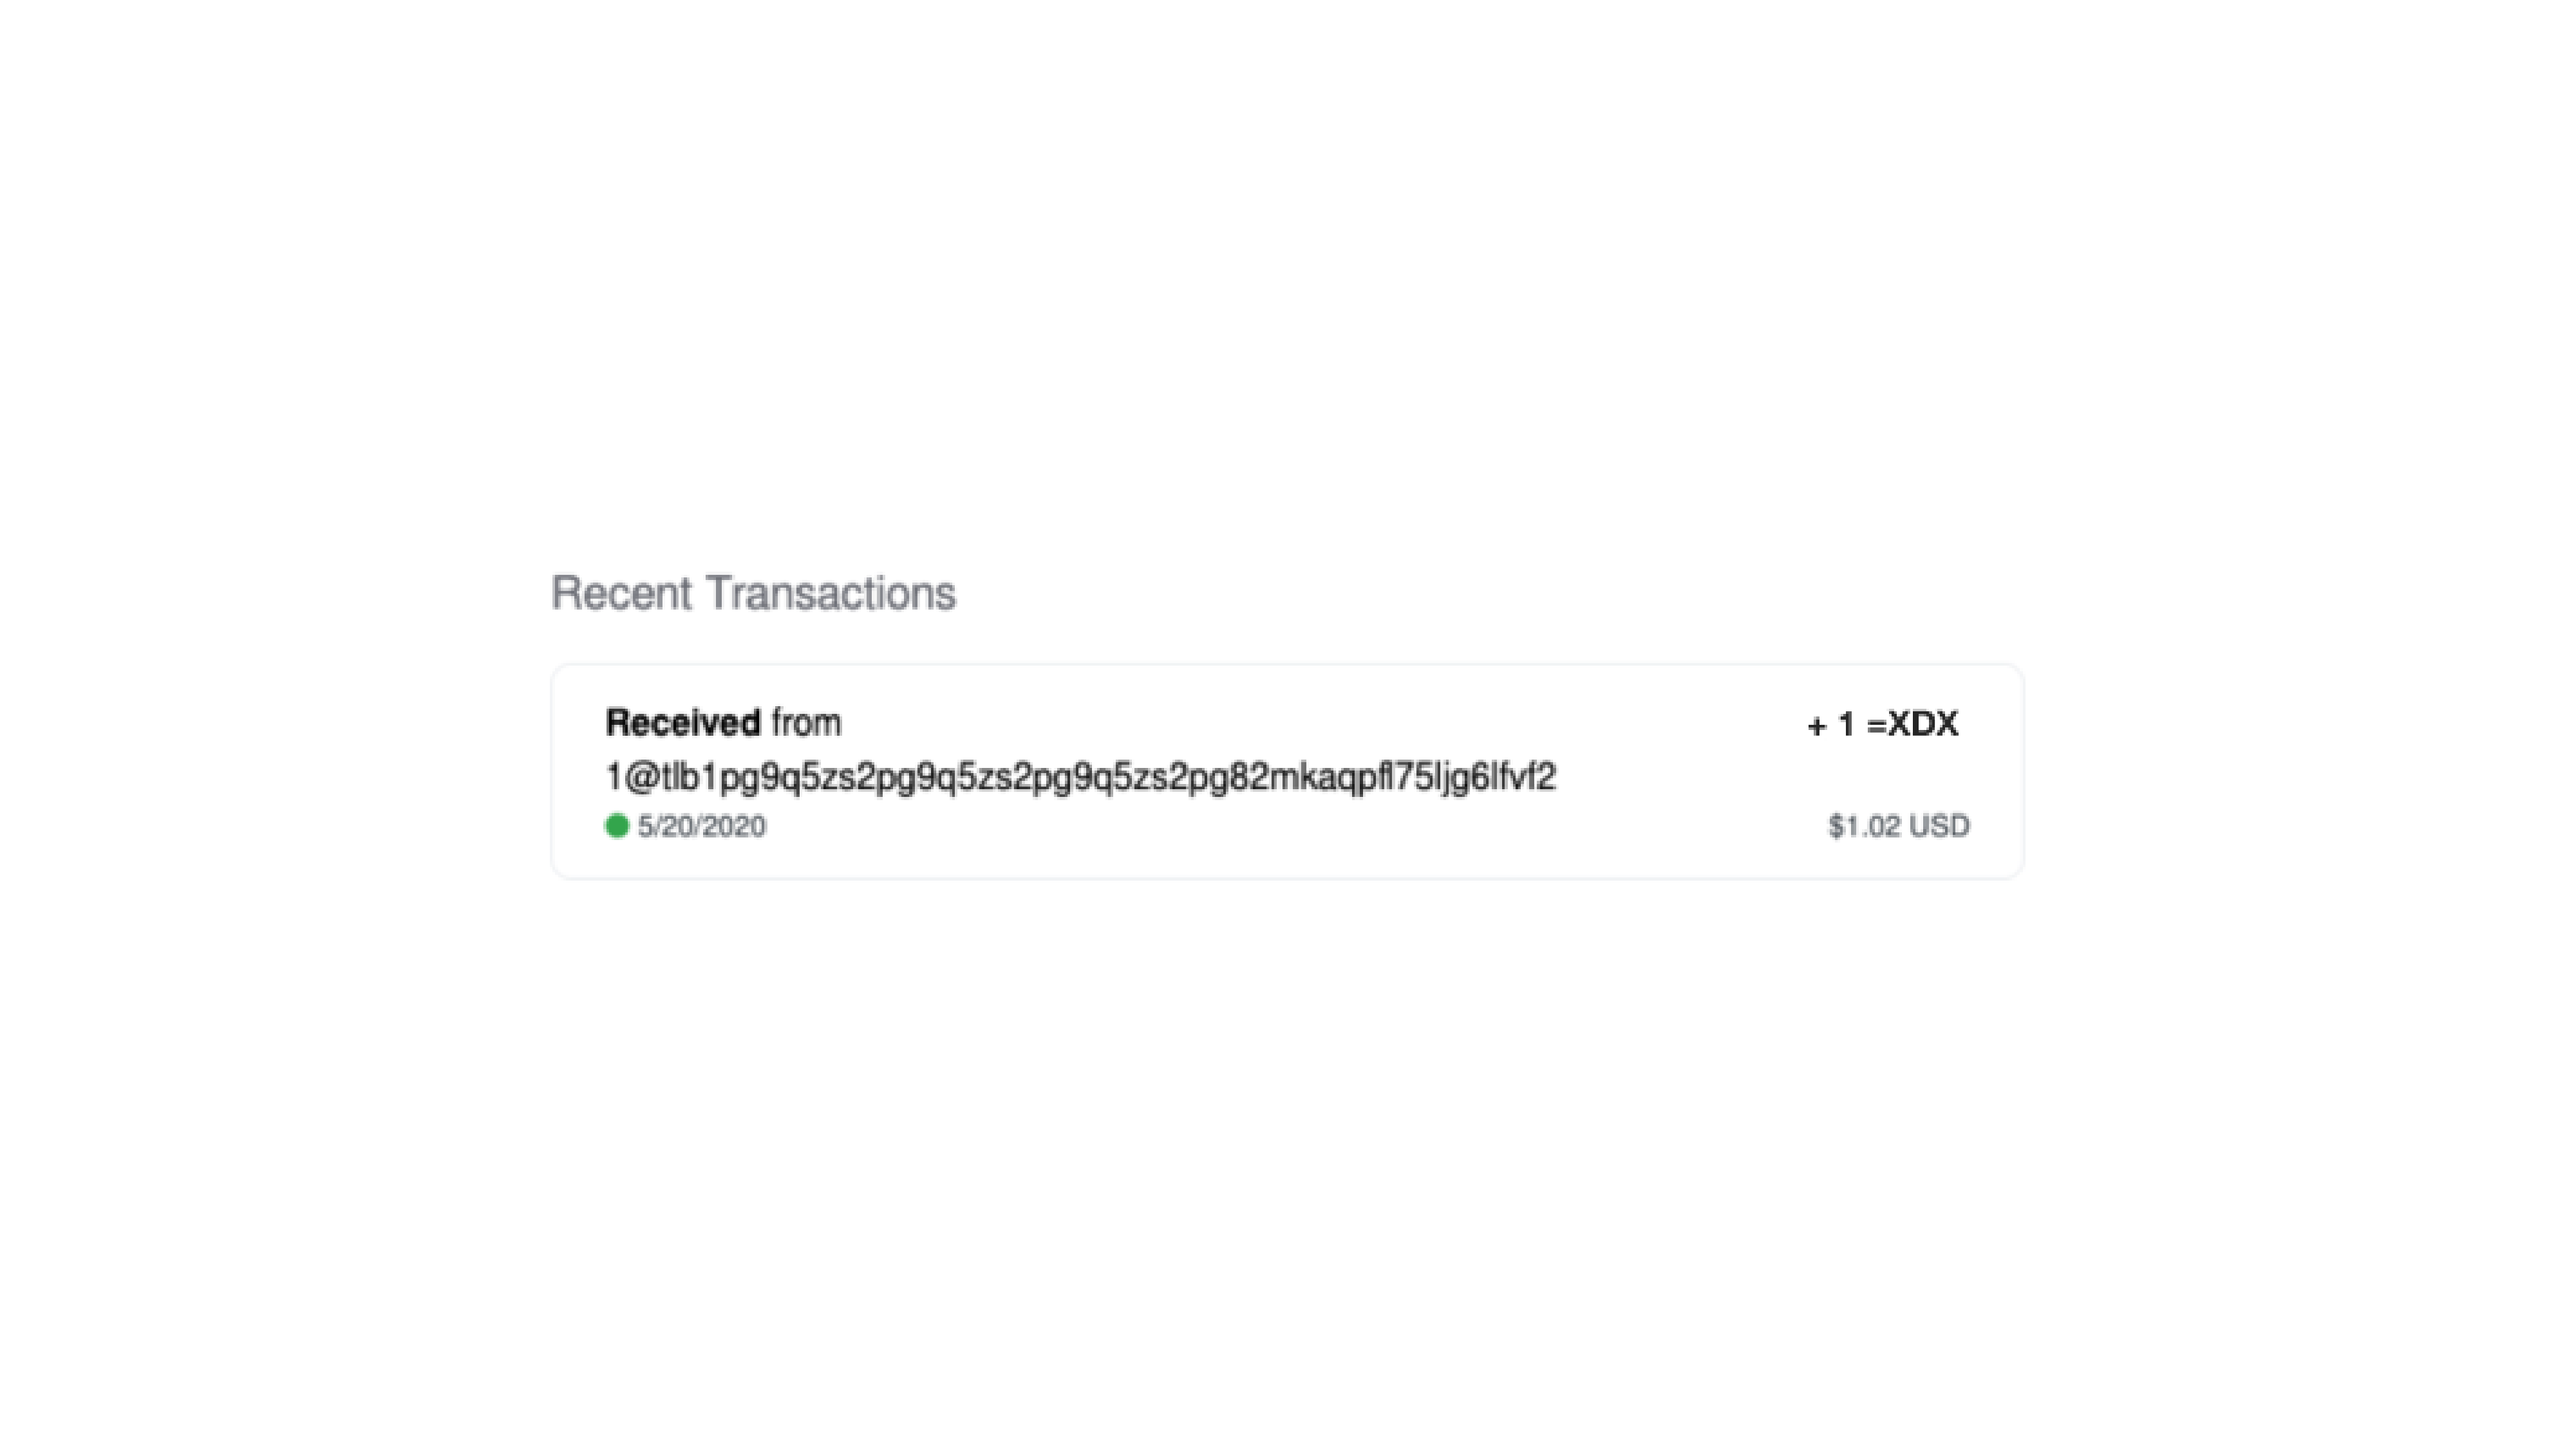 Figure 3.0 View transactions list